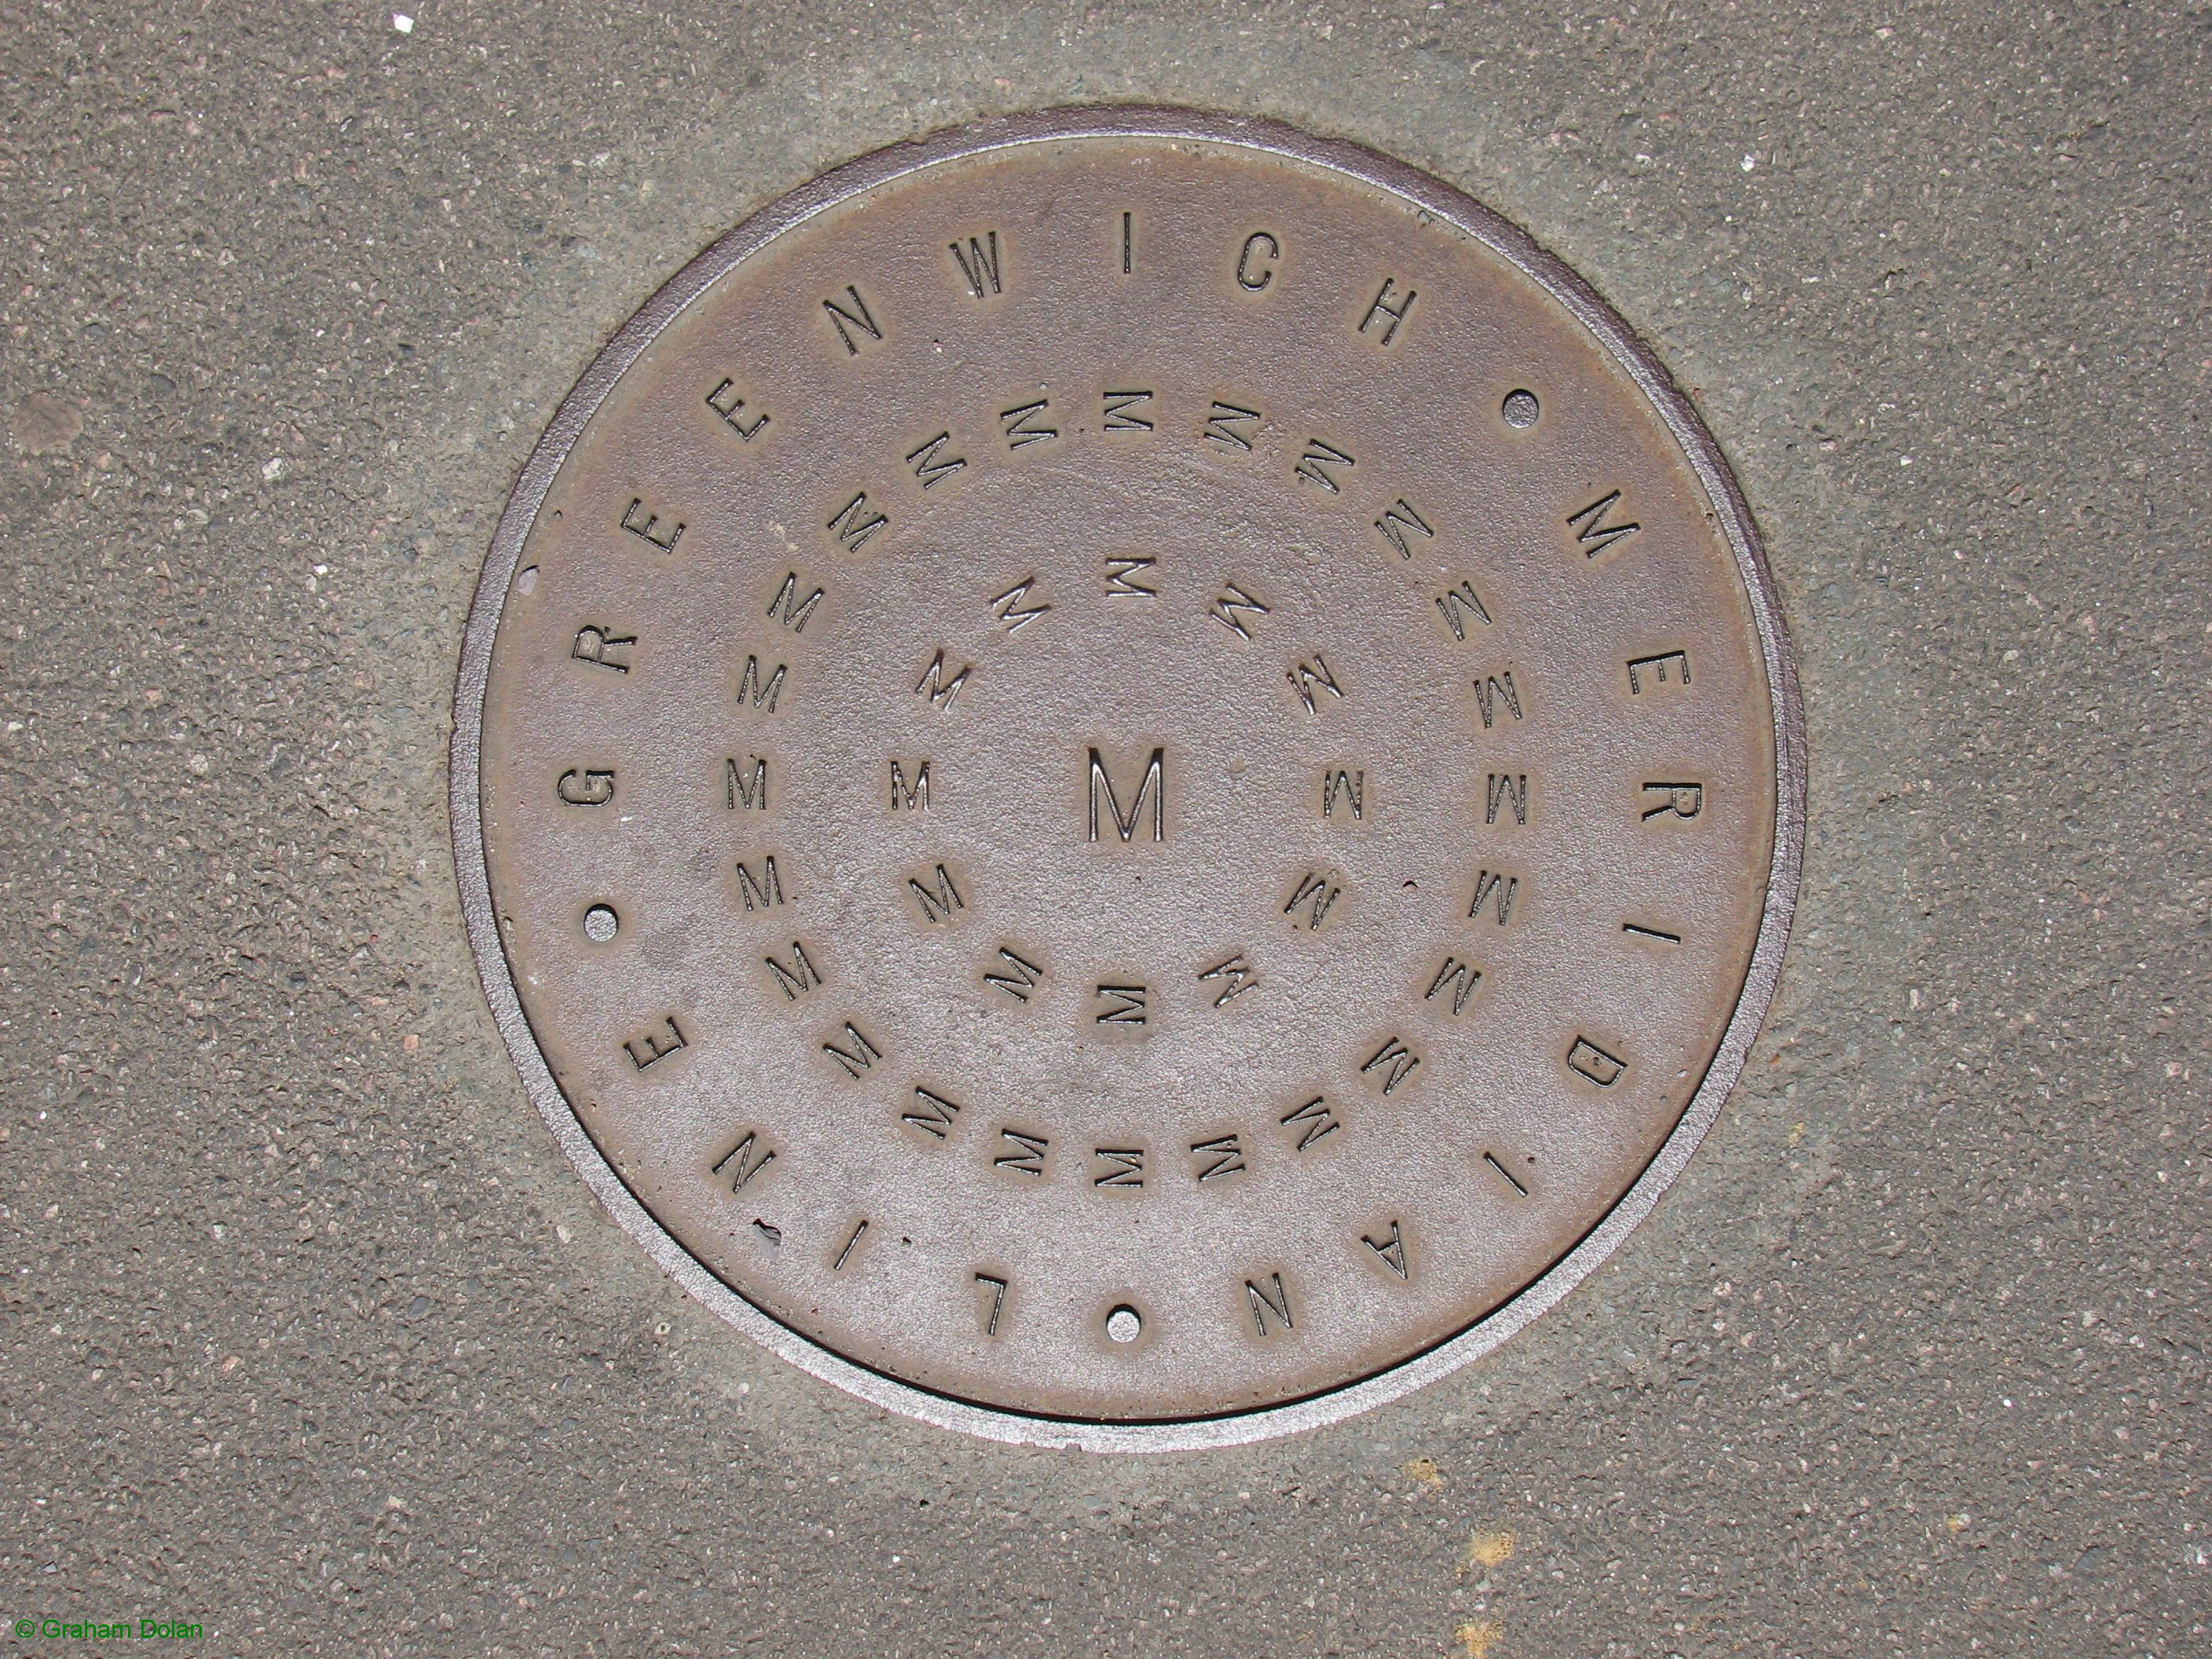 Greenwich Meridian Marker; England; LB Waltham Forest; Walthamstow (E17)